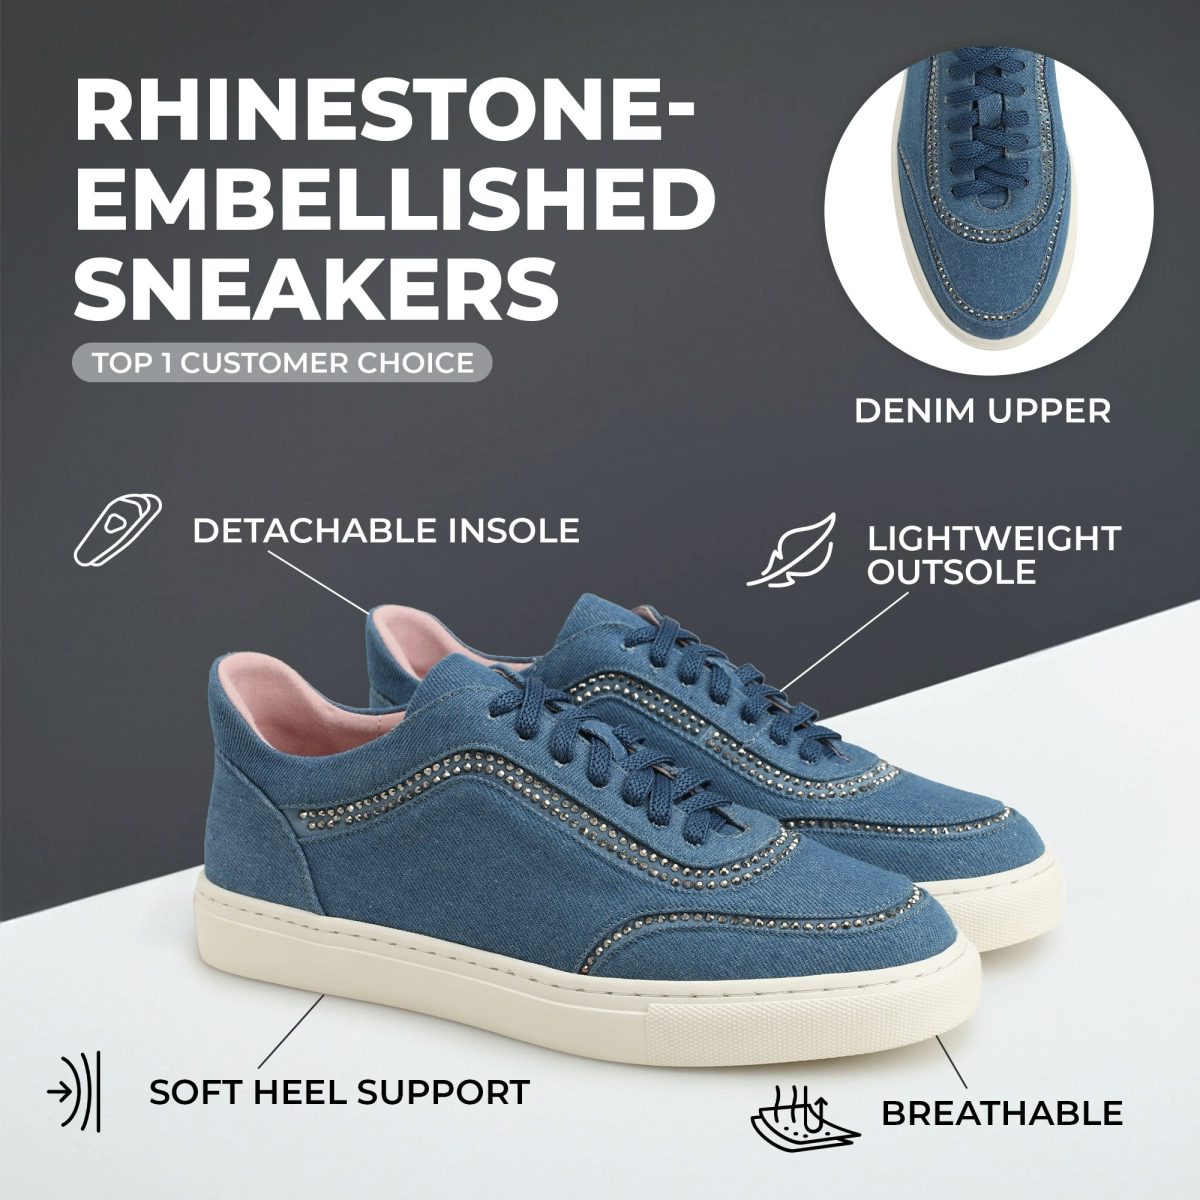 Rhinestone-embellished sneakers